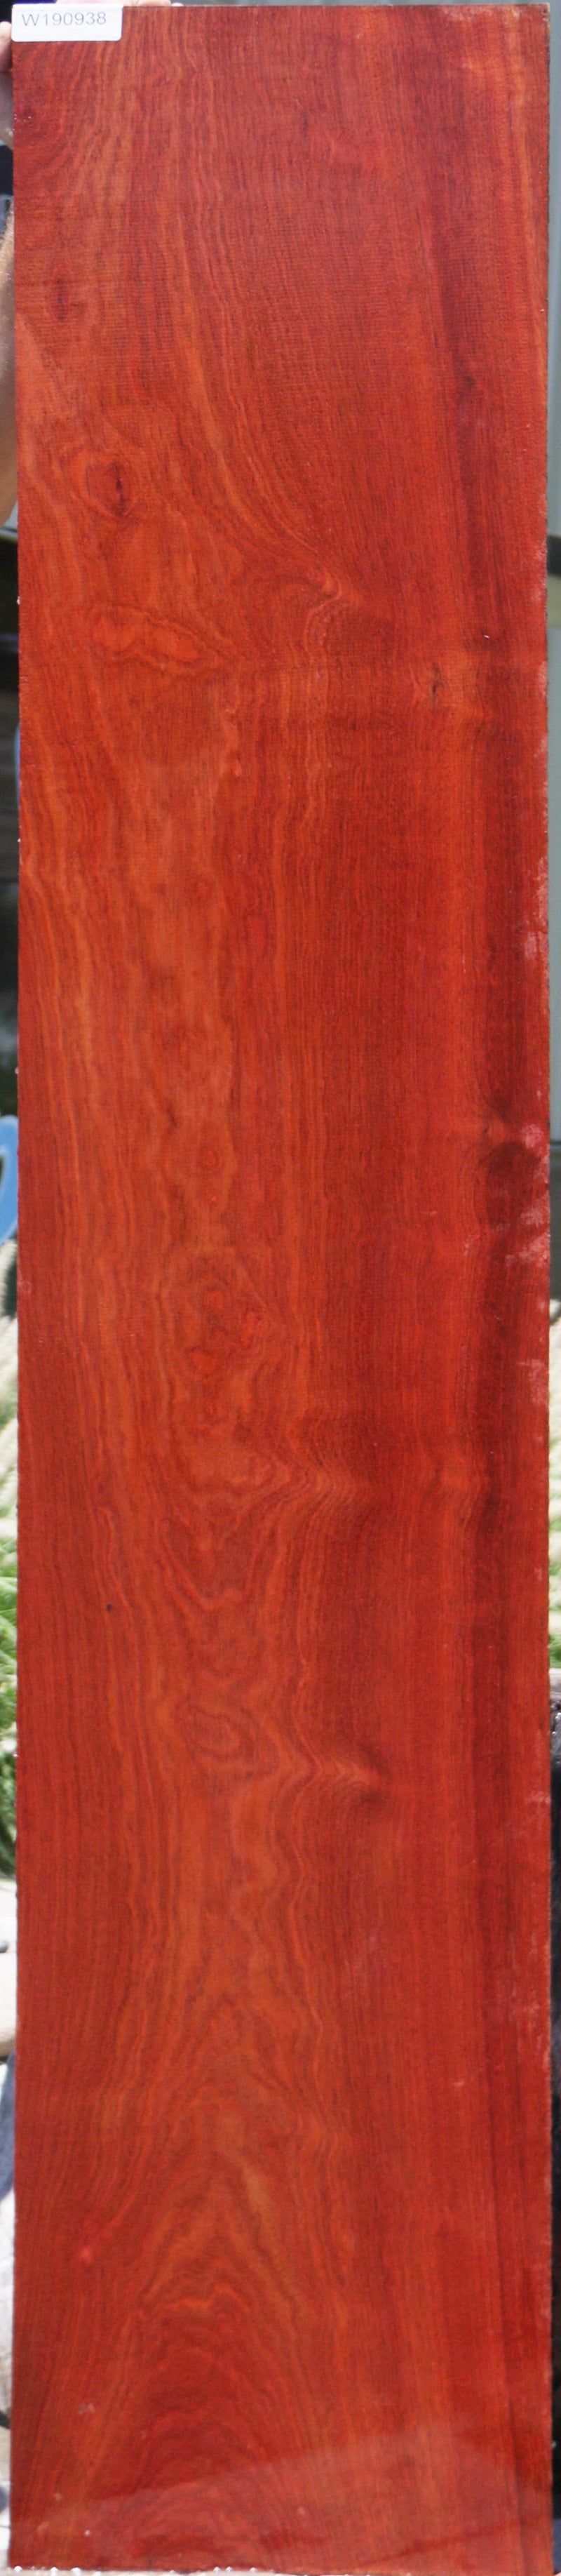 Extra Fancy Bloodwood Lumber